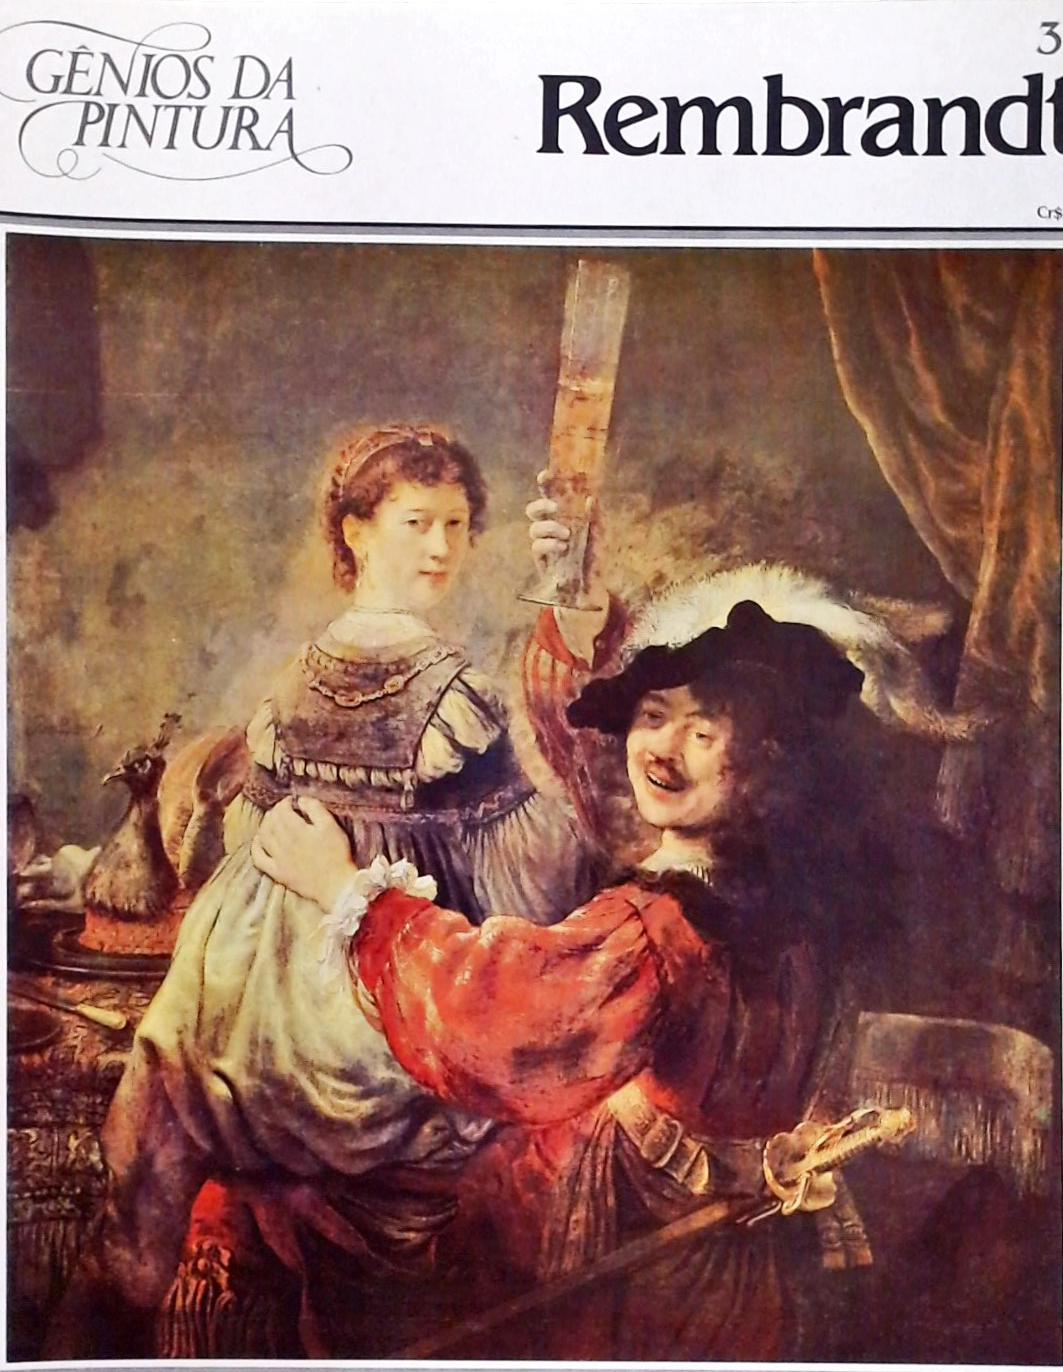 Gênios da Pintura - Rembrandt